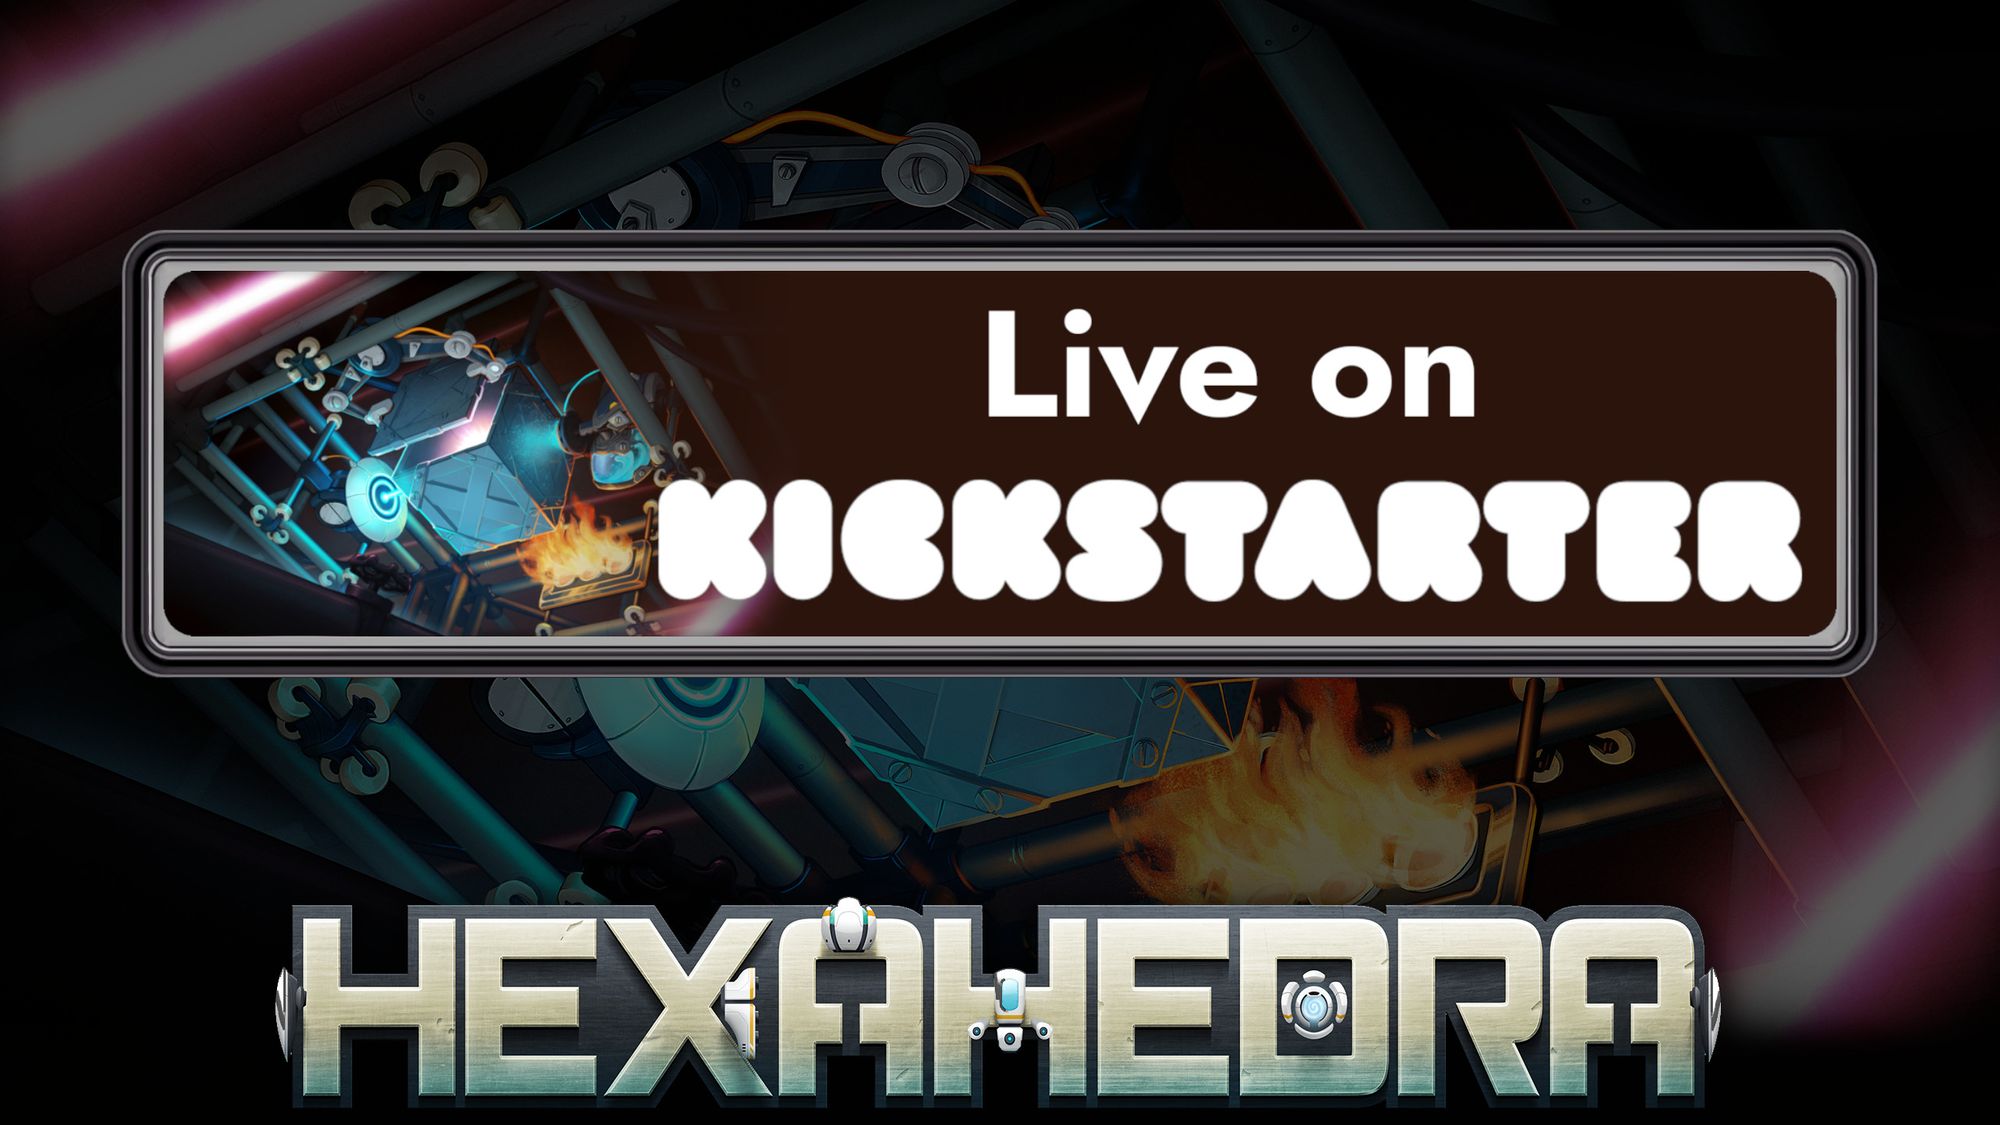 Hexahedra Kickstarter, Part 2